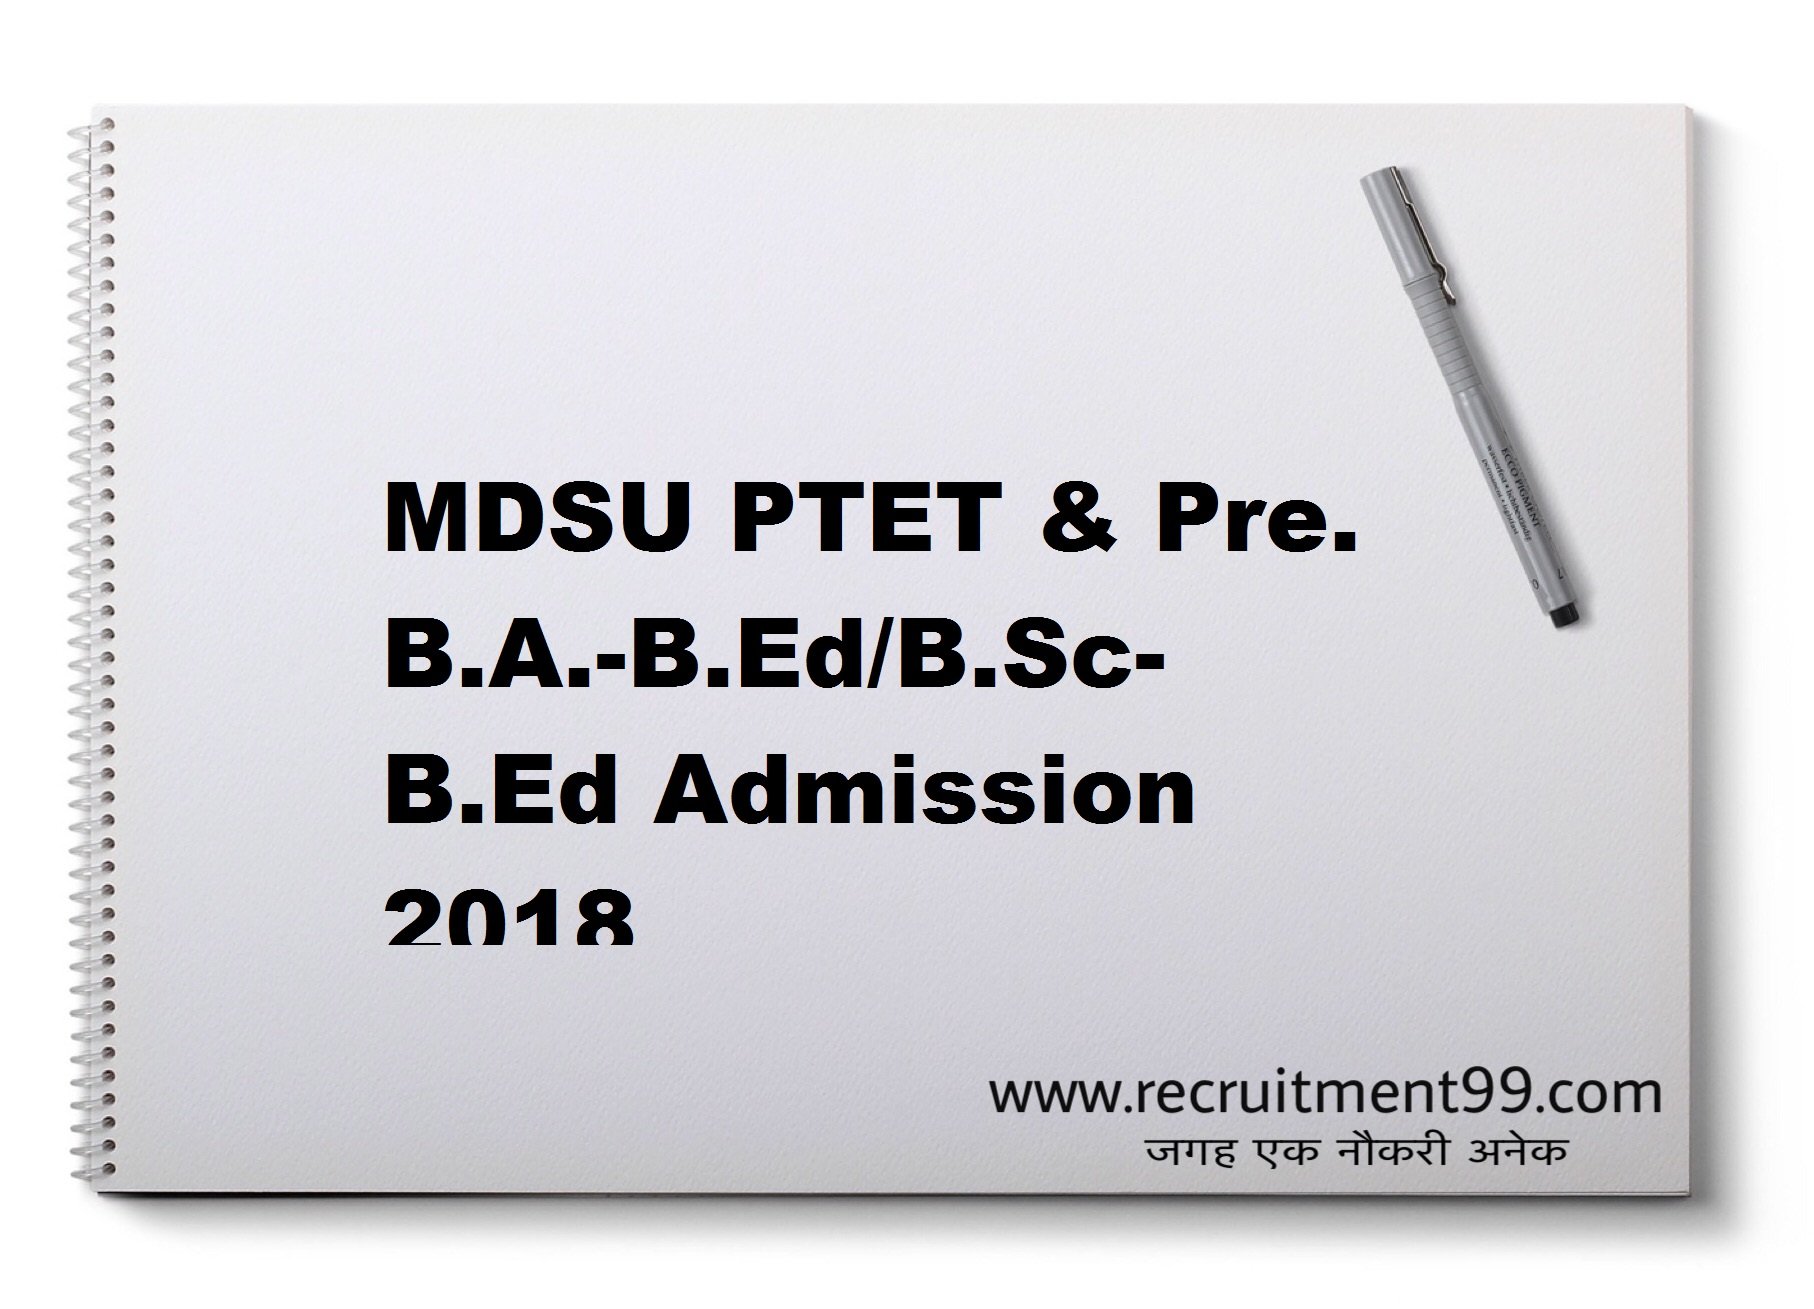 MDSU PTET & Pre. B.A.-B.Ed/B.Sc-B.Ed Admission Admit Card Result 2018